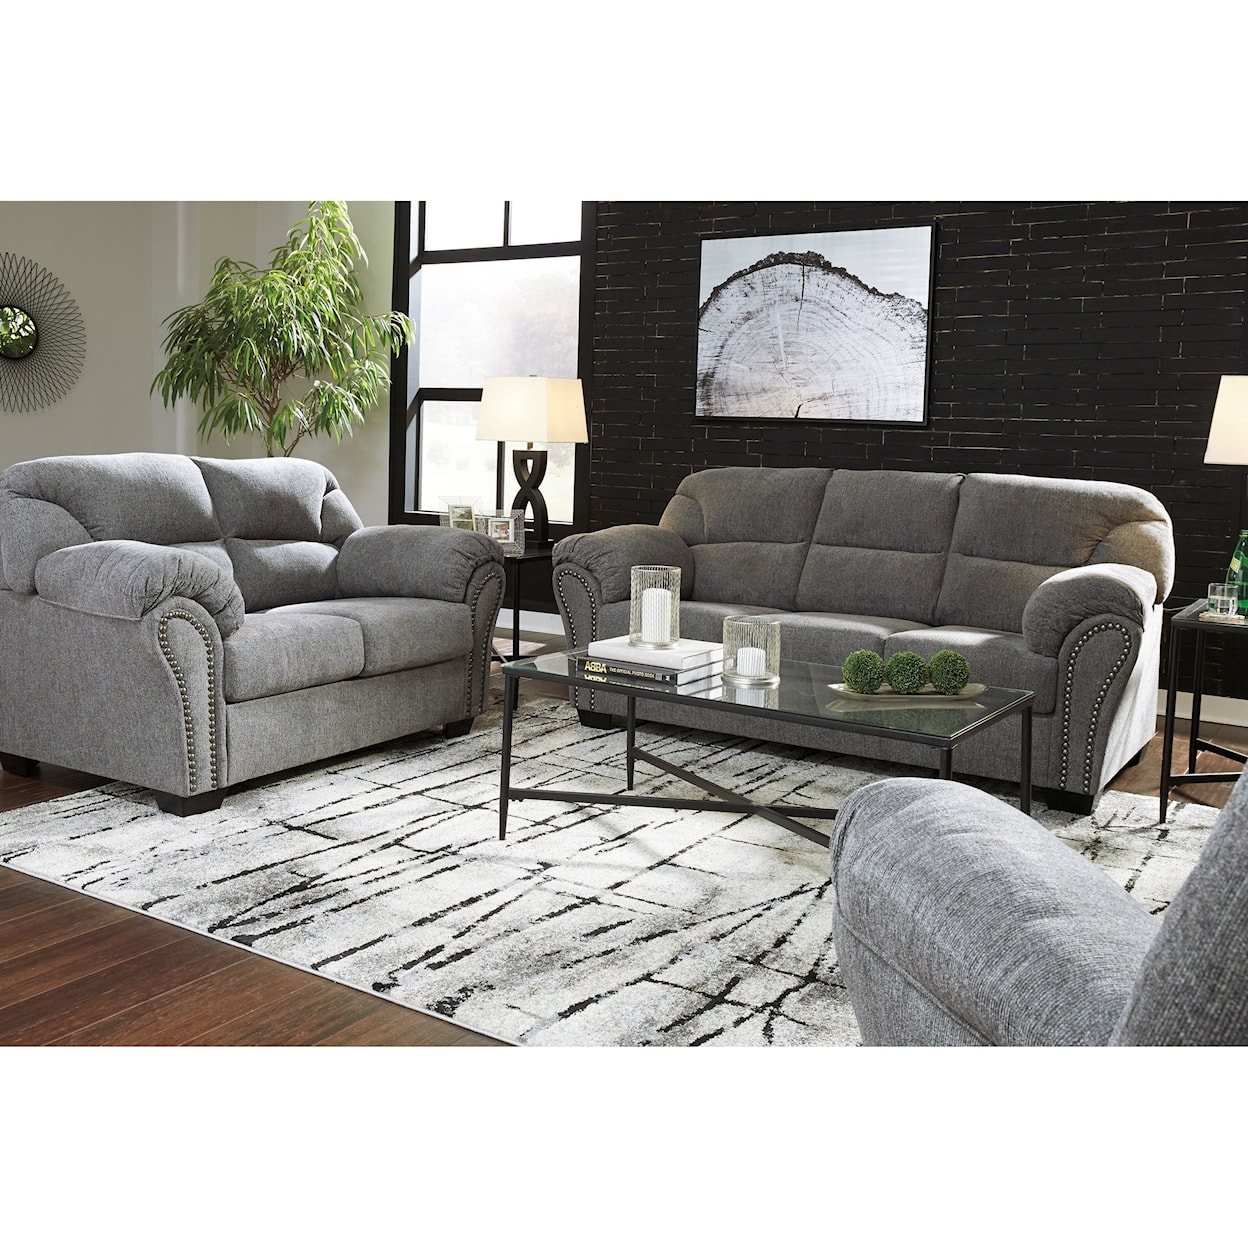 Ashley Furniture Benchcraft Allmaxx Living Room Group